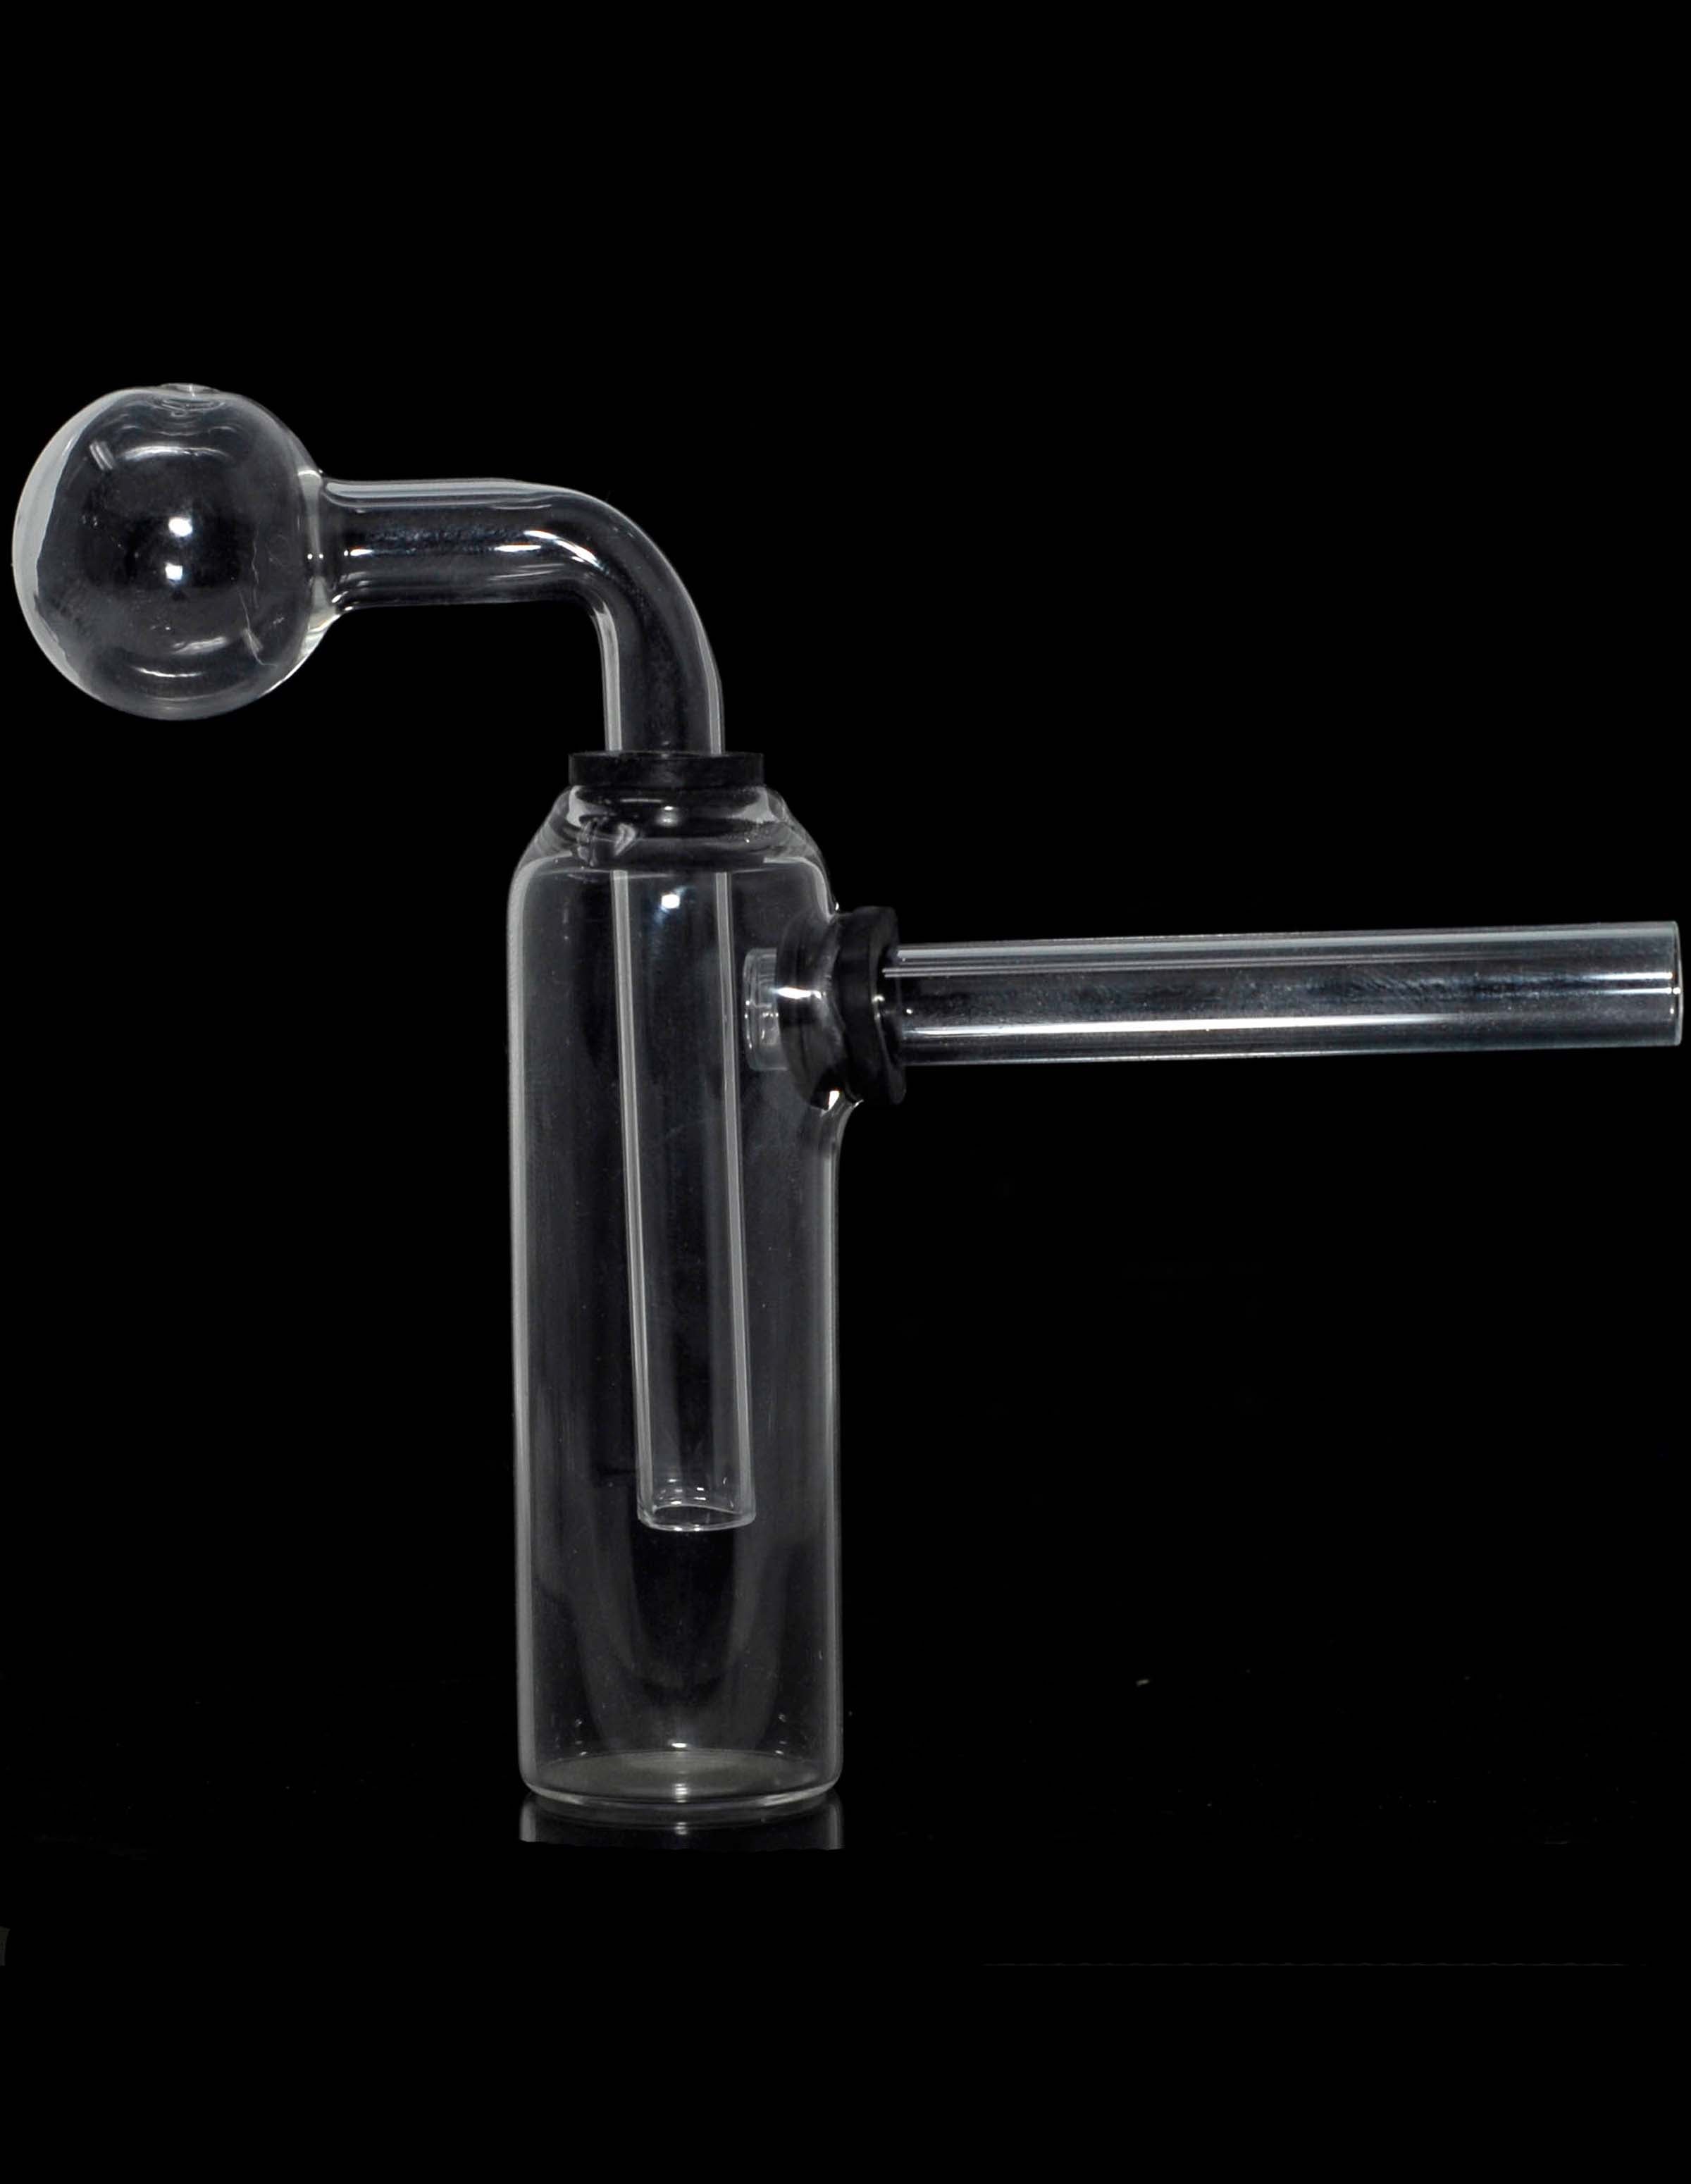 Oil burner pipe vial tube shaped  pyrex glass Bubbler Water pipe